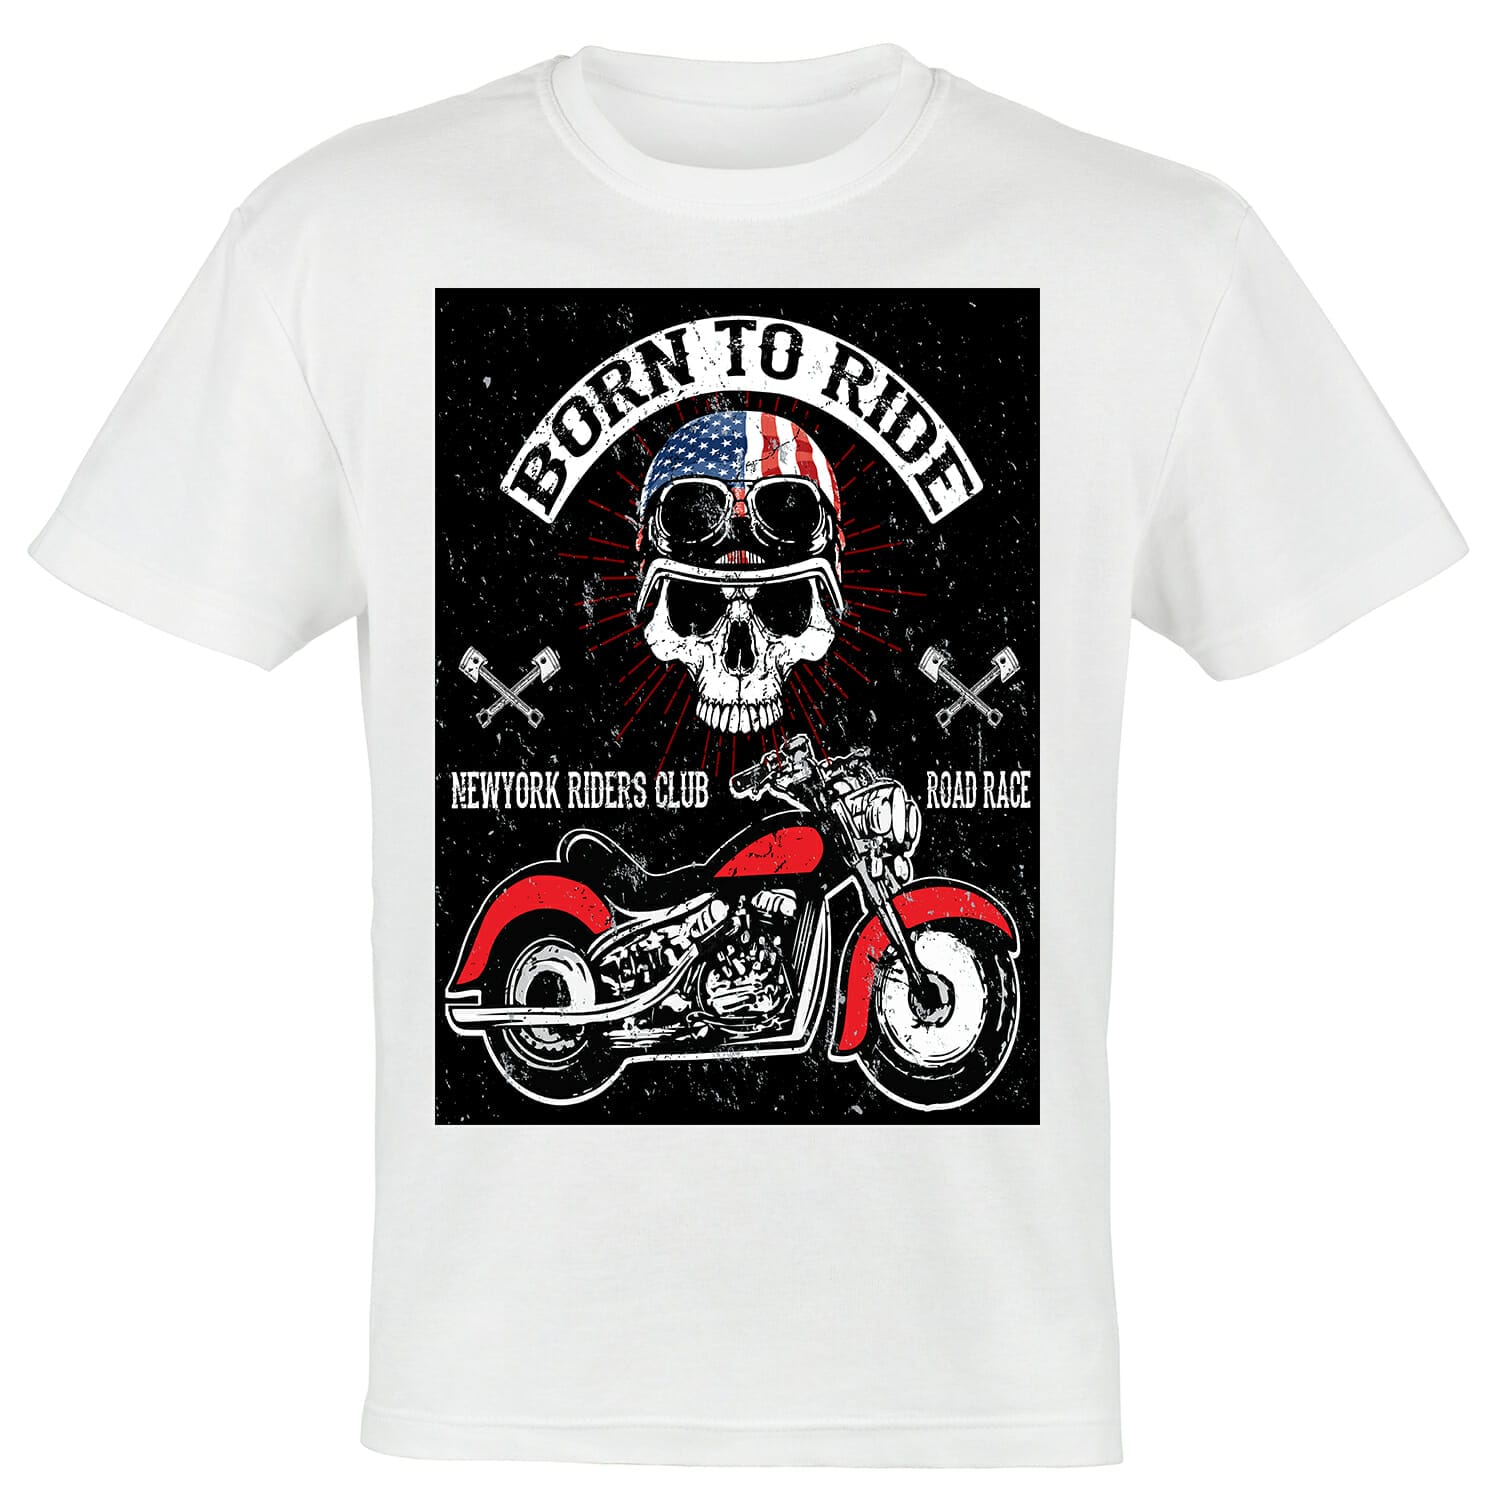 born to ride bike tshirt design